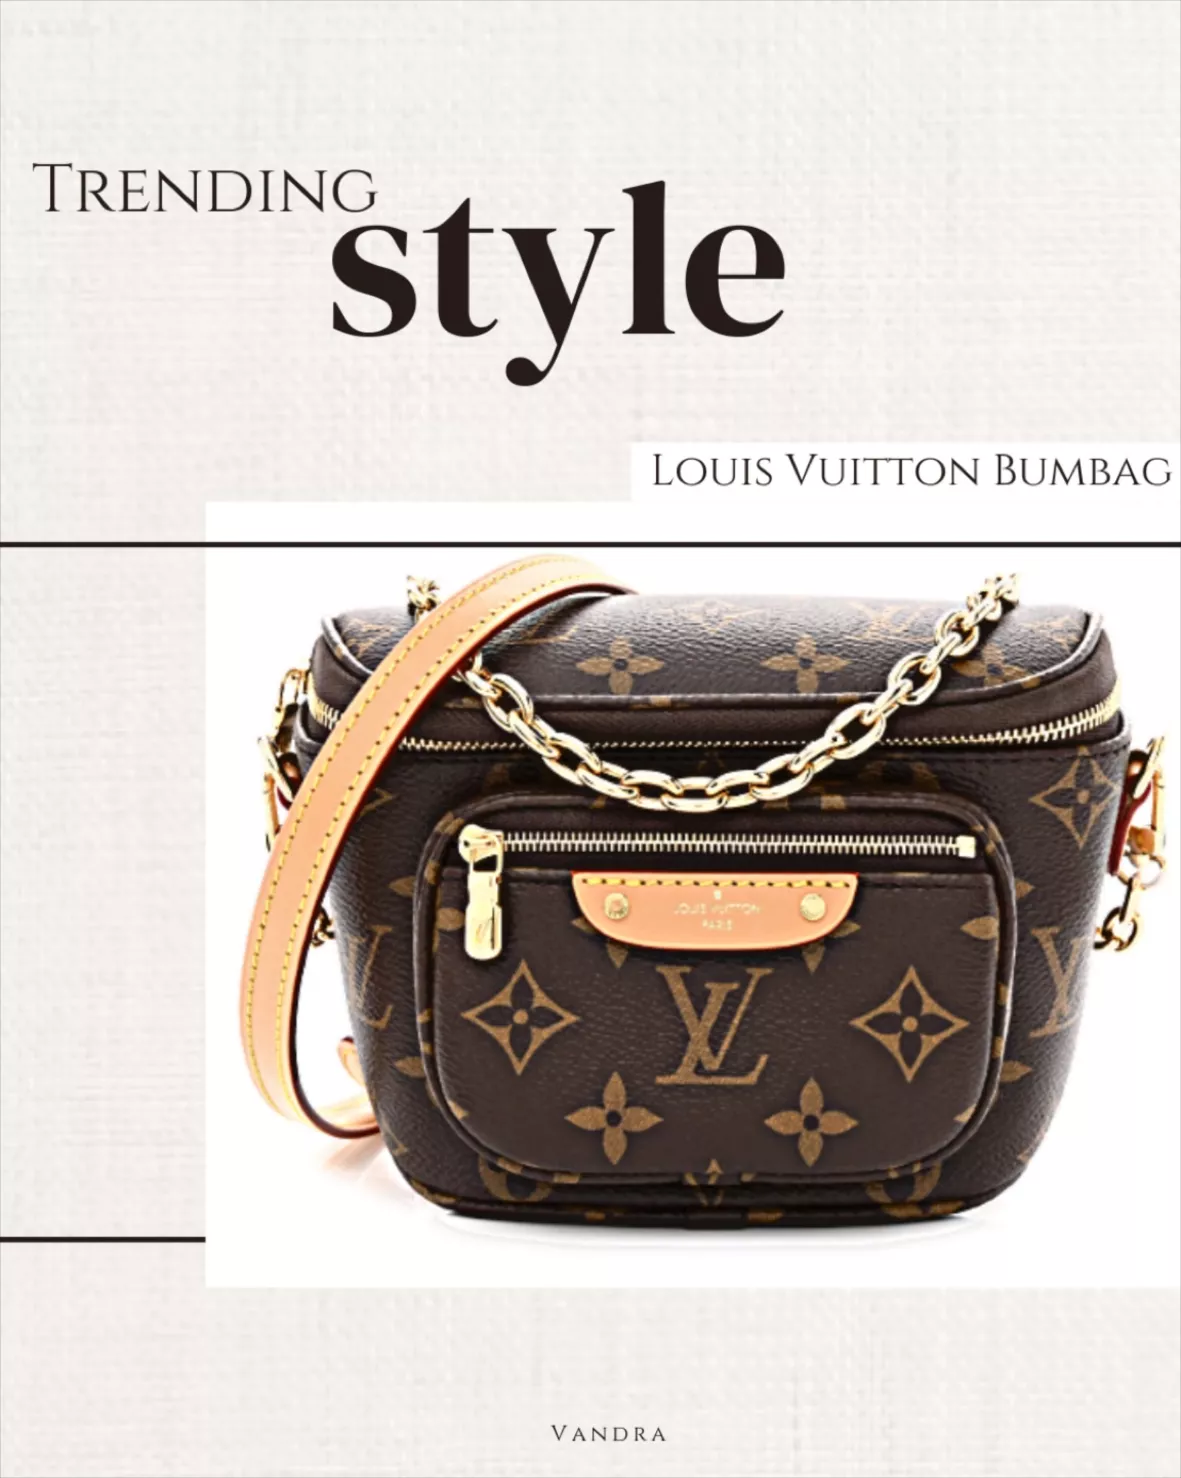 Louis Vuitton Bag  Louis vuitton handbags outlet, Fashion bags, Bags